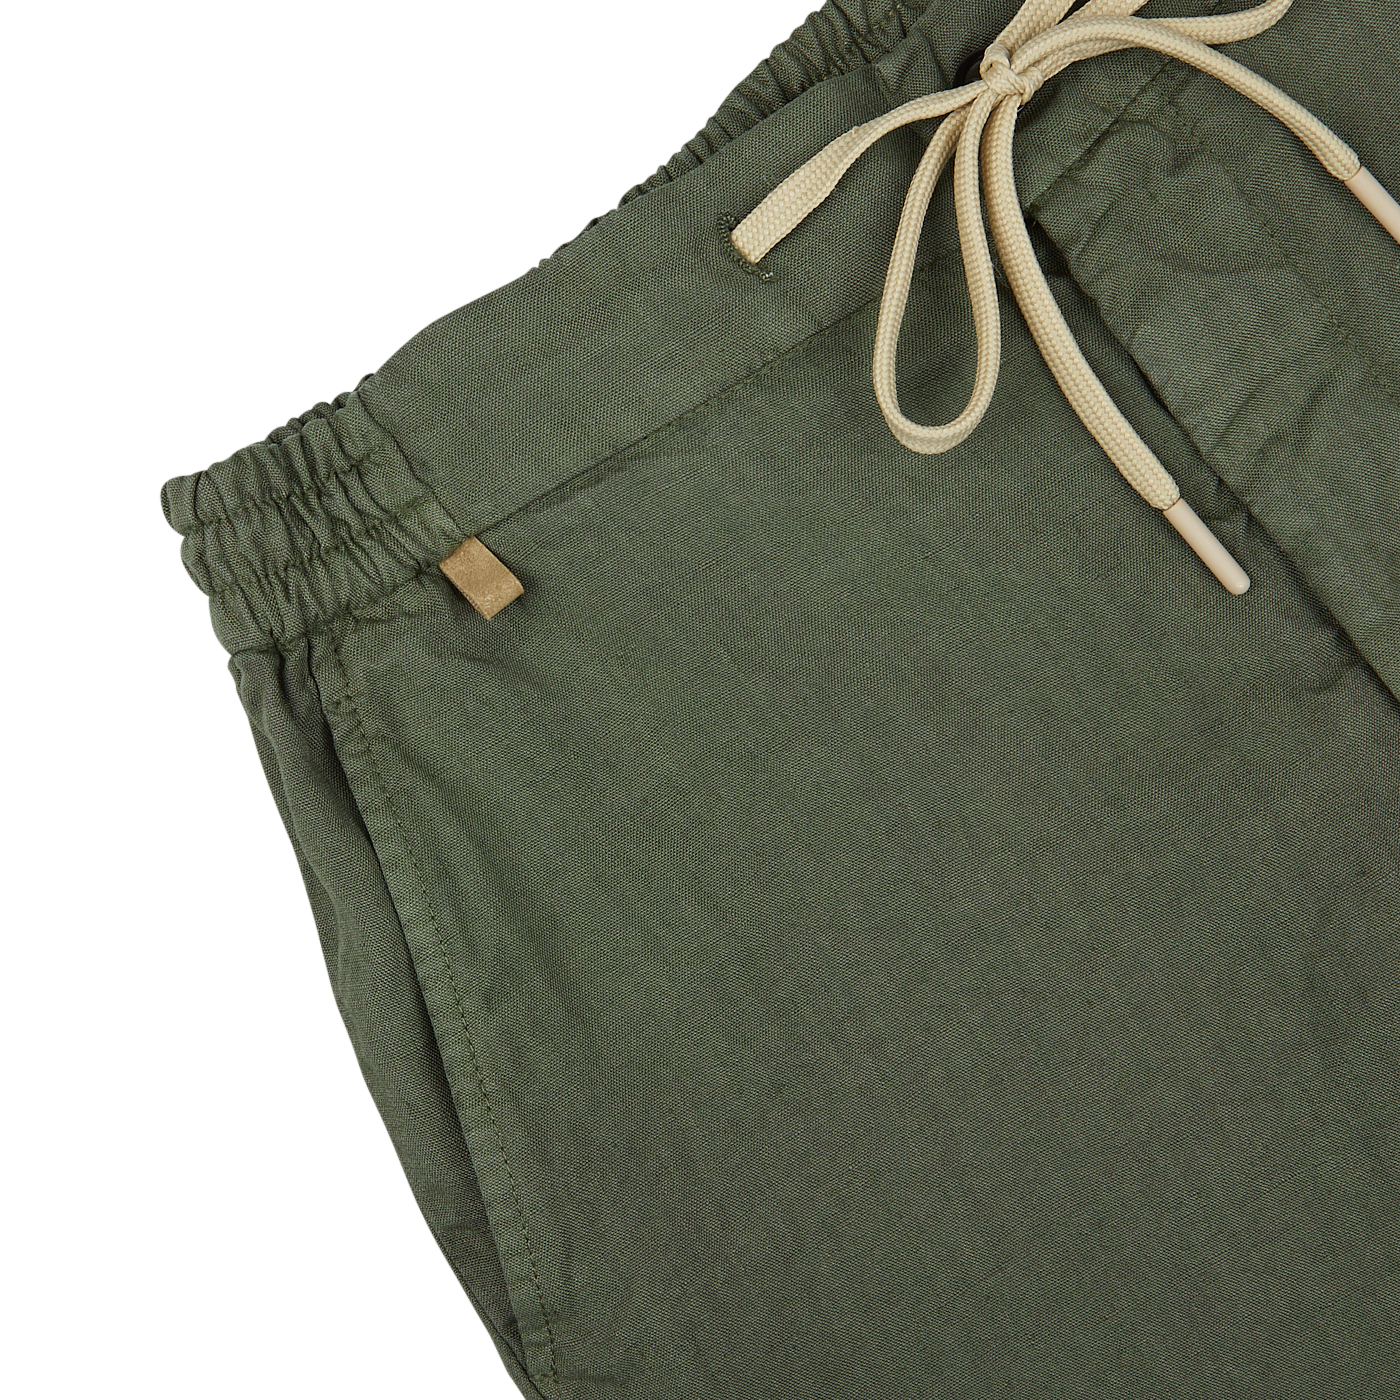 Green Berwich militare drawstring shorts with elastic waistband.